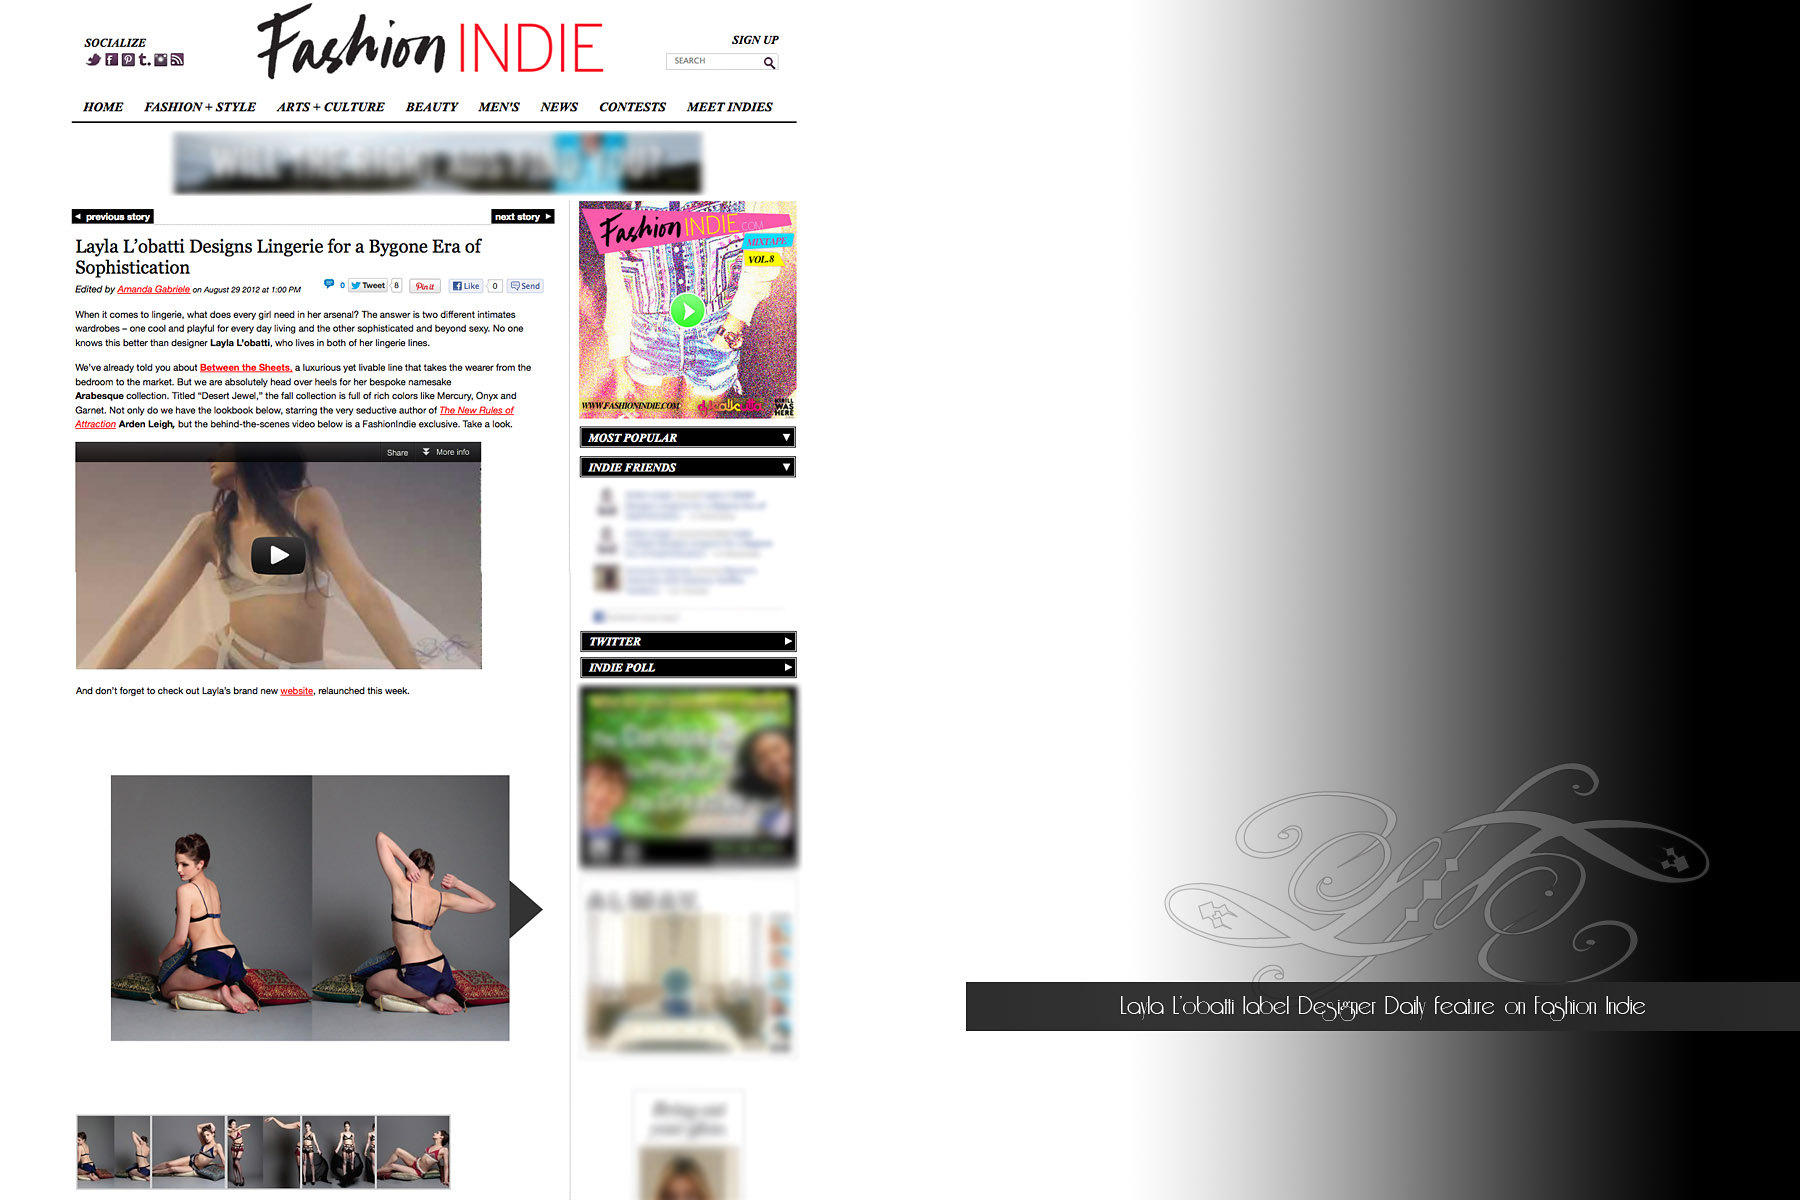 Fashion Indie Layla L'obatti Designer Daily featuring Arabesque 2012 collection